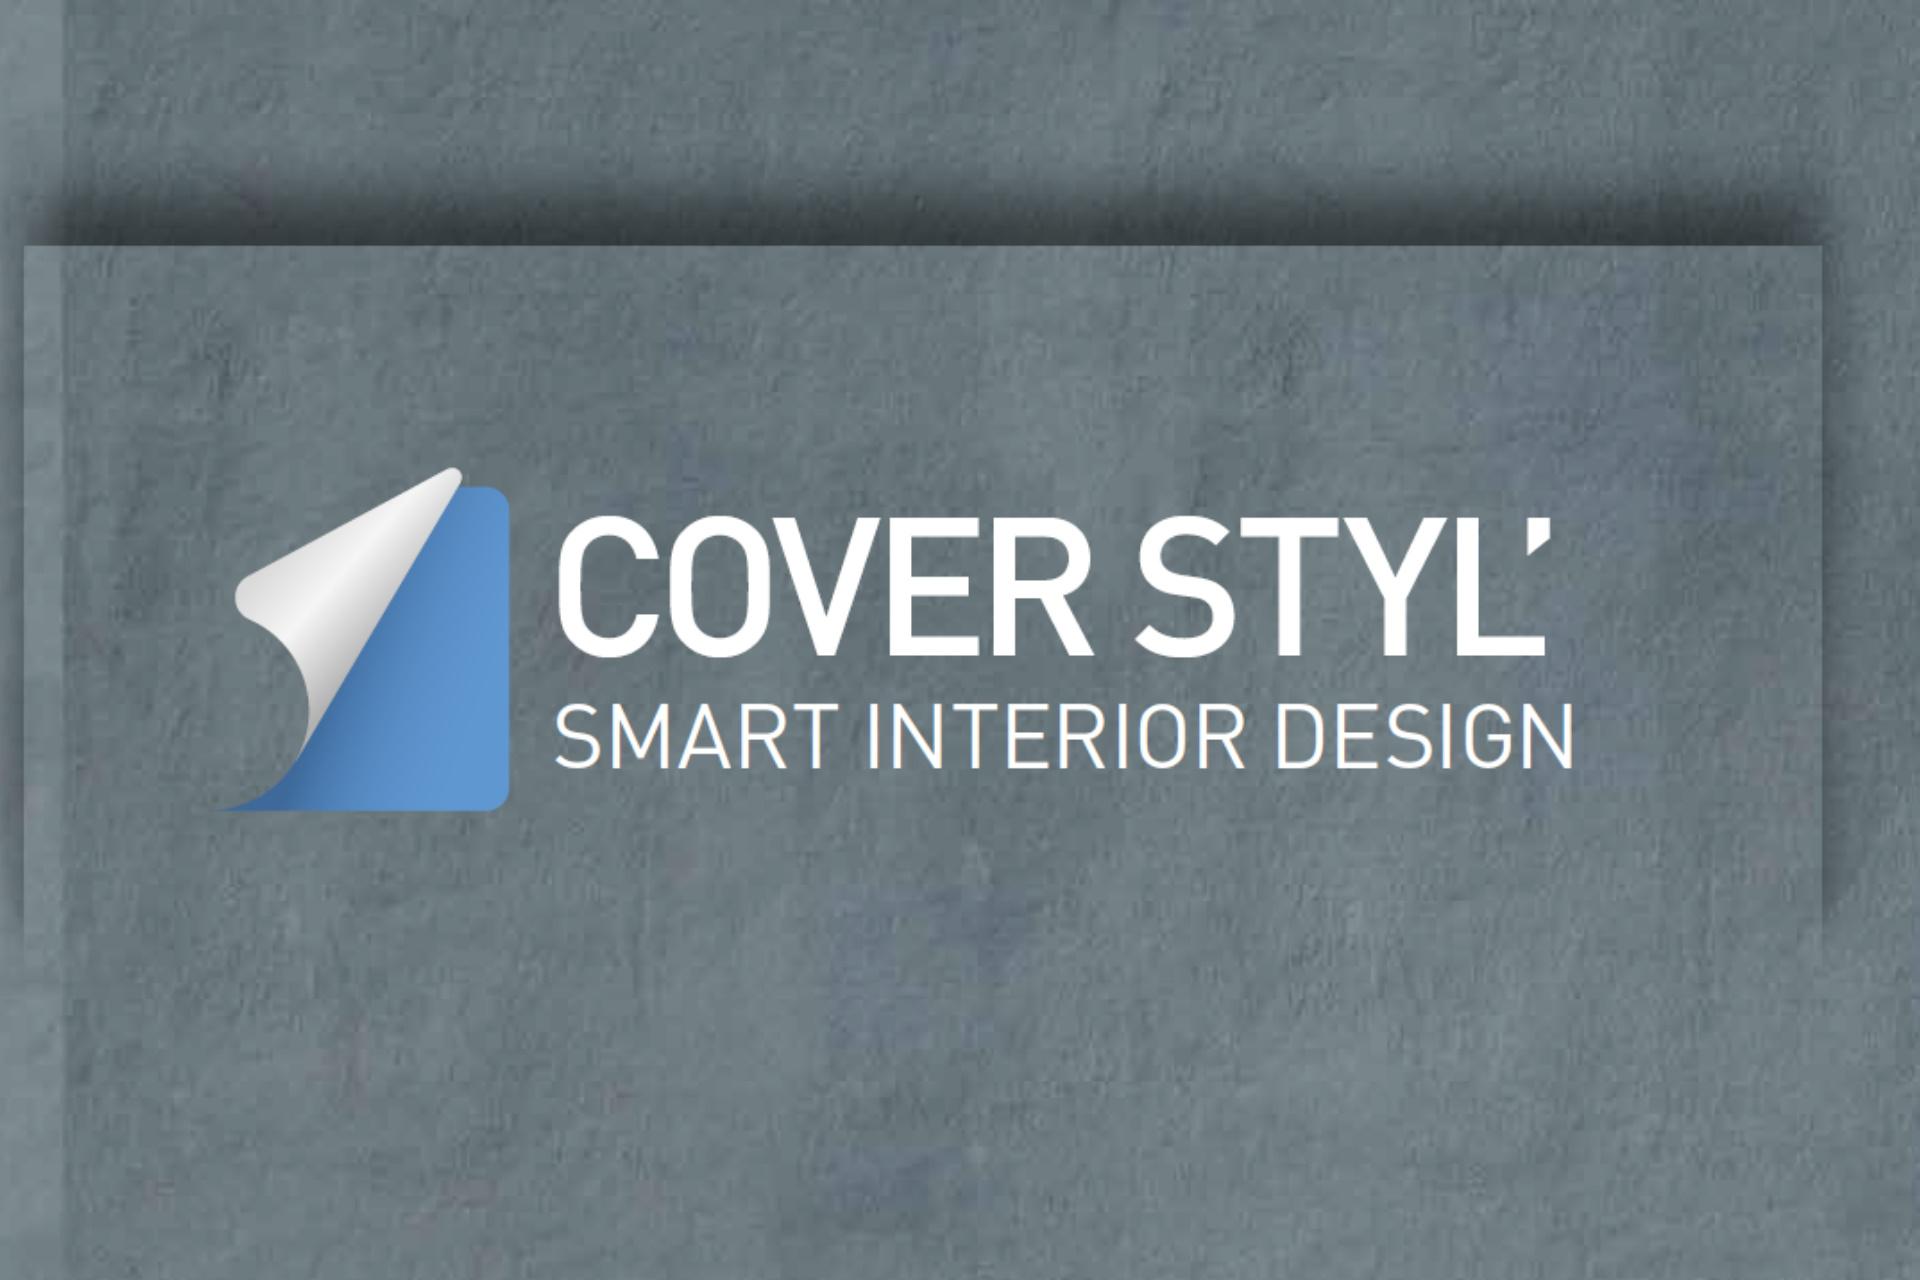 Foto: Cover Styl - Premium Dekorfolien